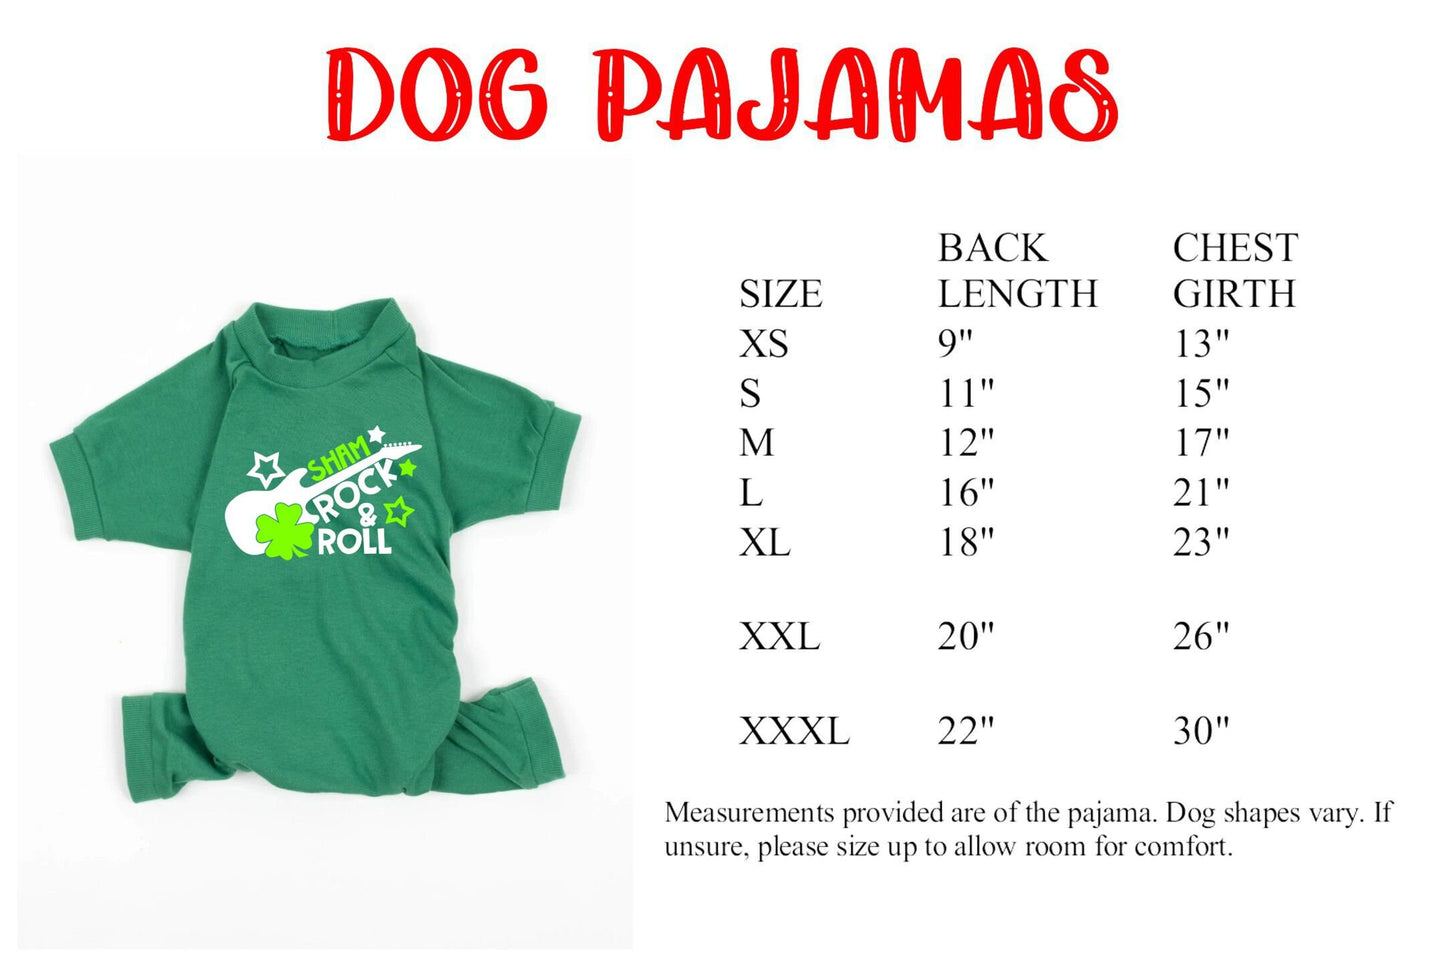 Shamrock and Roll Pajamas - Green Striped St Patrick's Day Pajamas